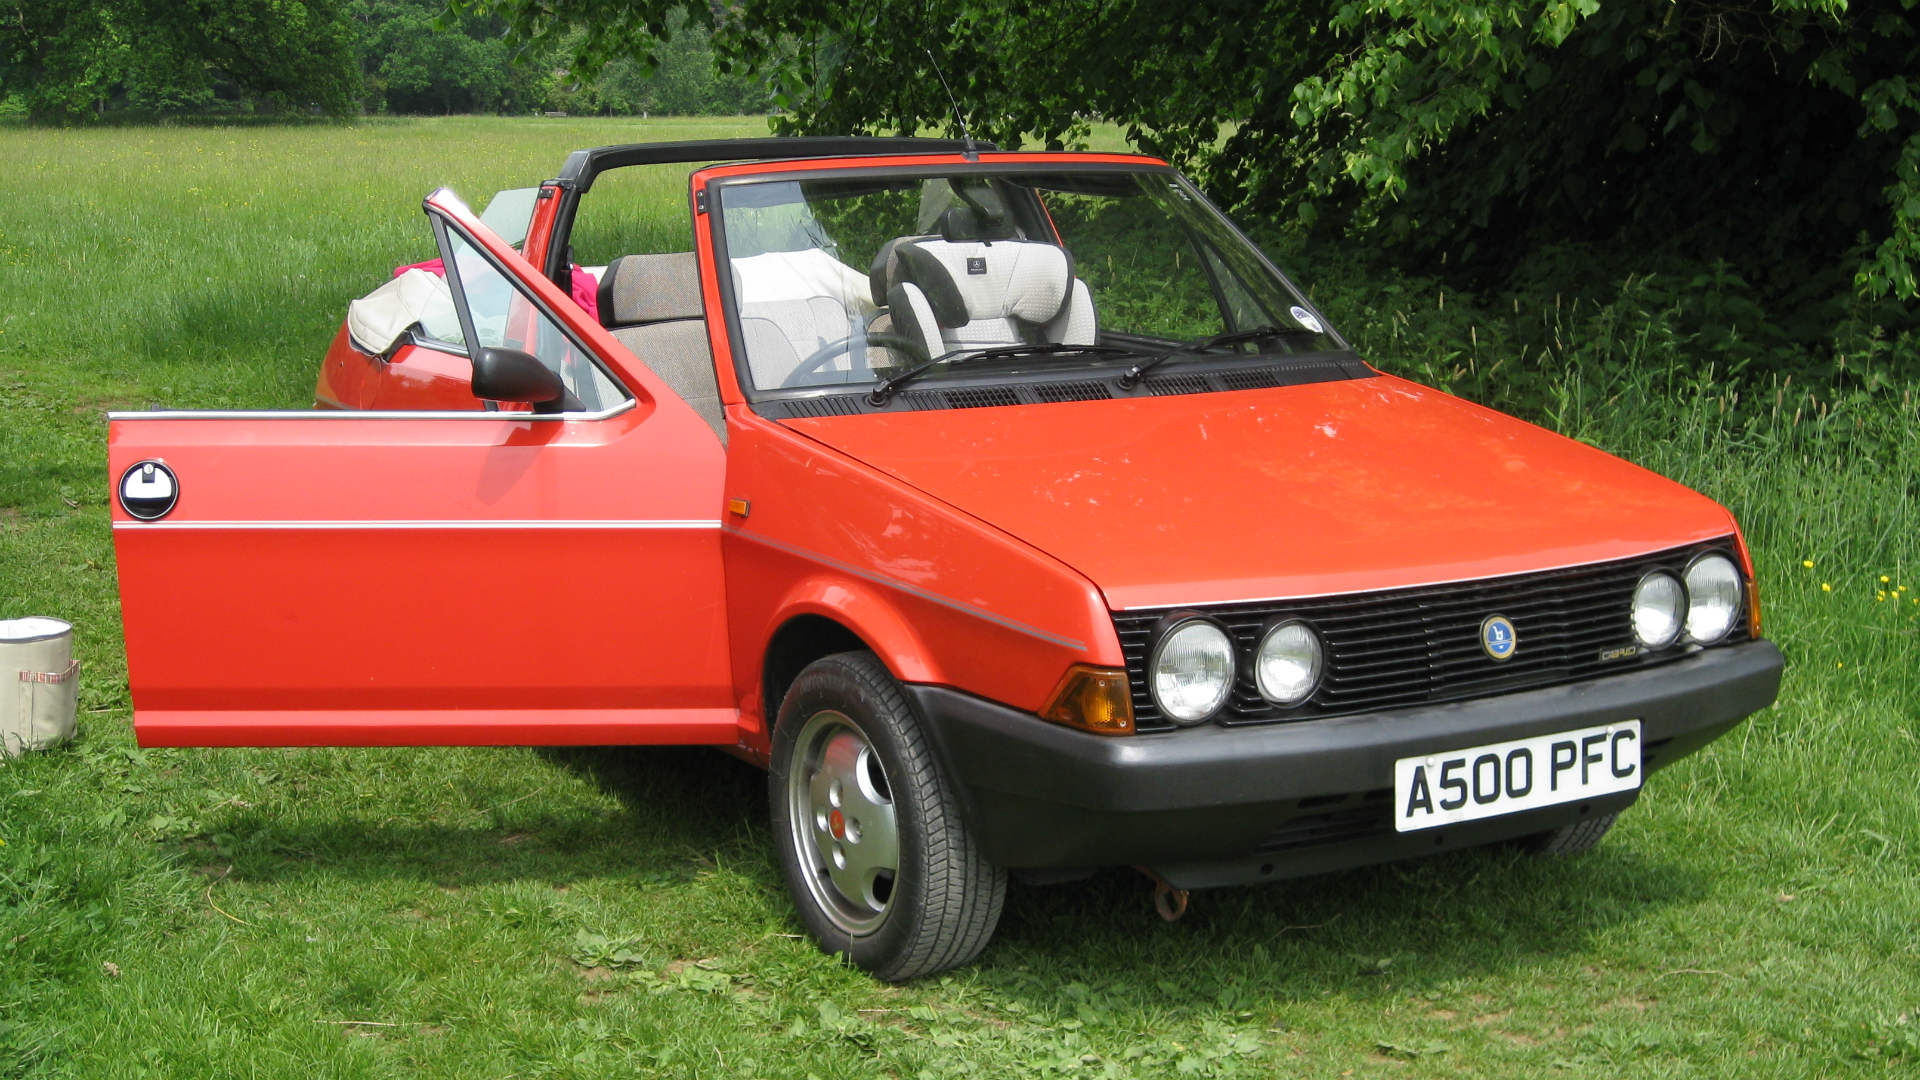 Whatever happened to the Fiat Strada? - PetrolBlog